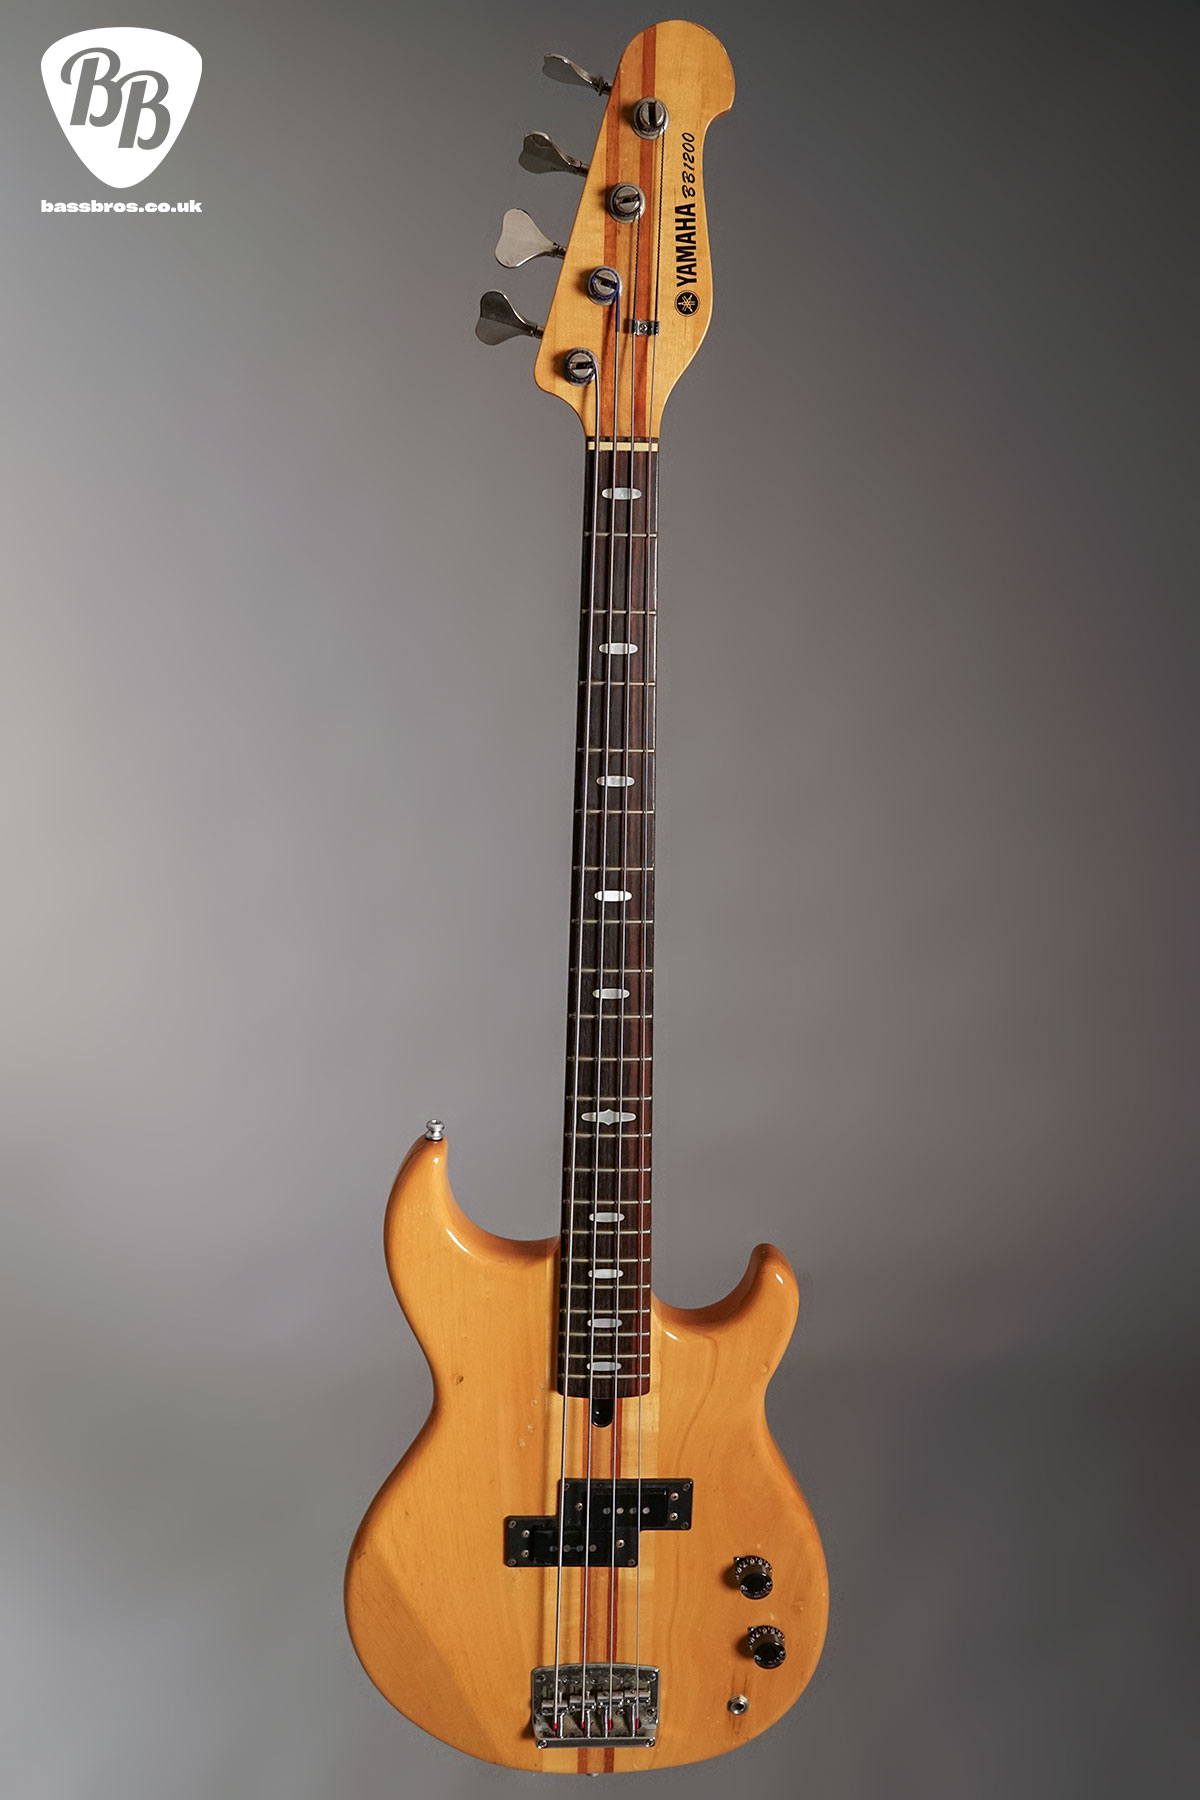 1981 Yamaha Broad Bass BB1200 | BassBros